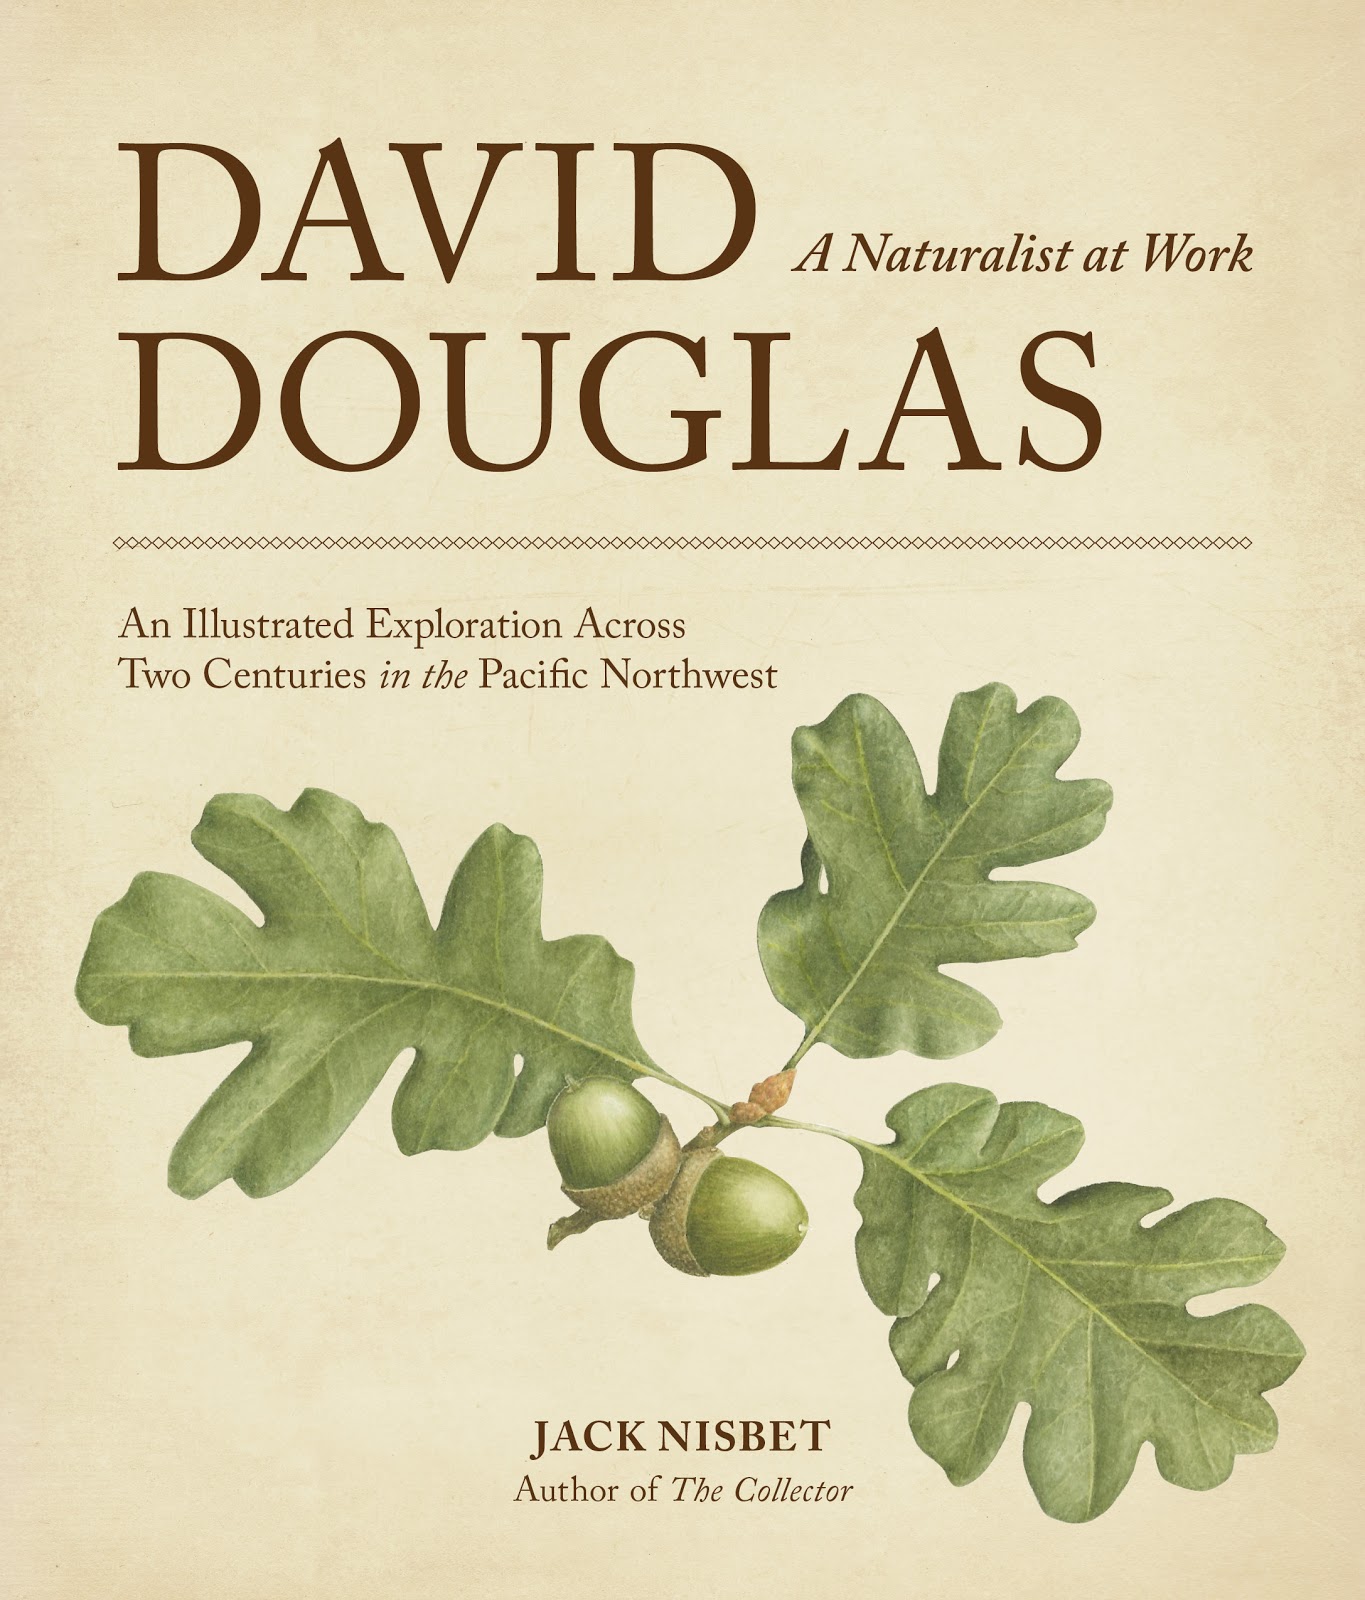 Натуралист работа. Дэвид Дуглас. Дэвид Дуглас (ботаник). Дэвид Дуглас 1834 Гавайи растения вит. Дэвид и Дуглас Грэшем.